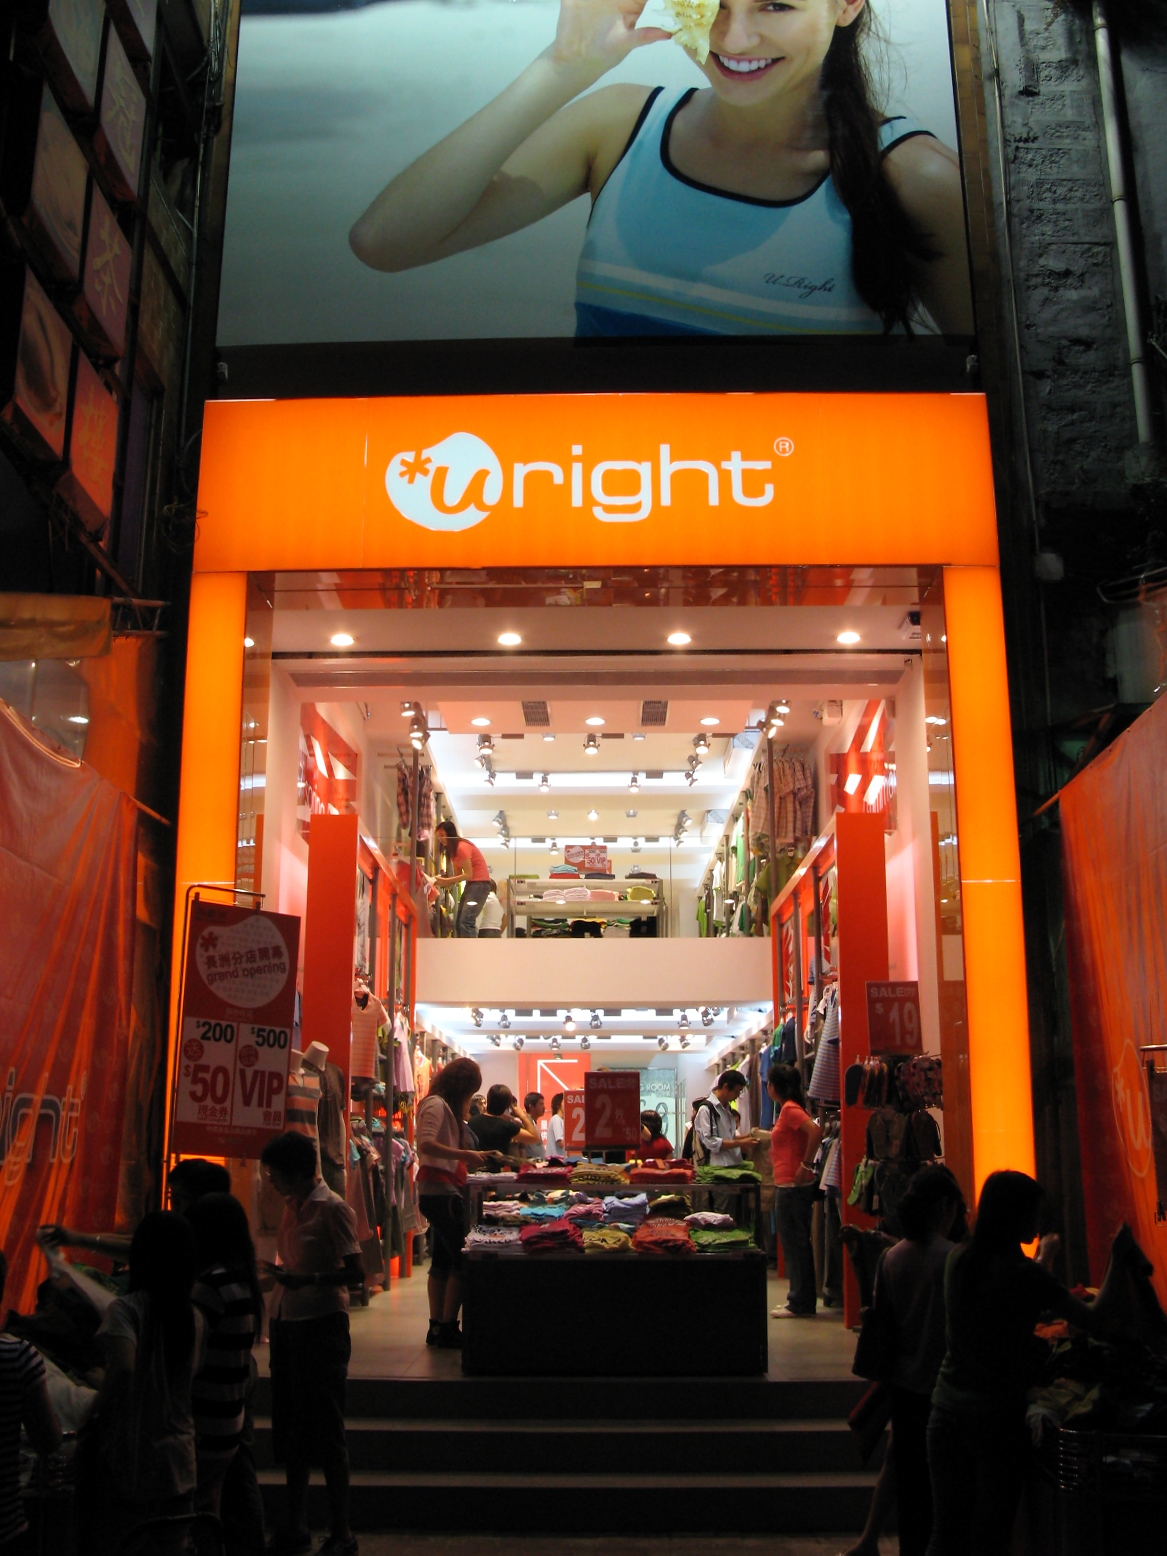 HK_Cheung_Chou_U-Right_Store.jpg